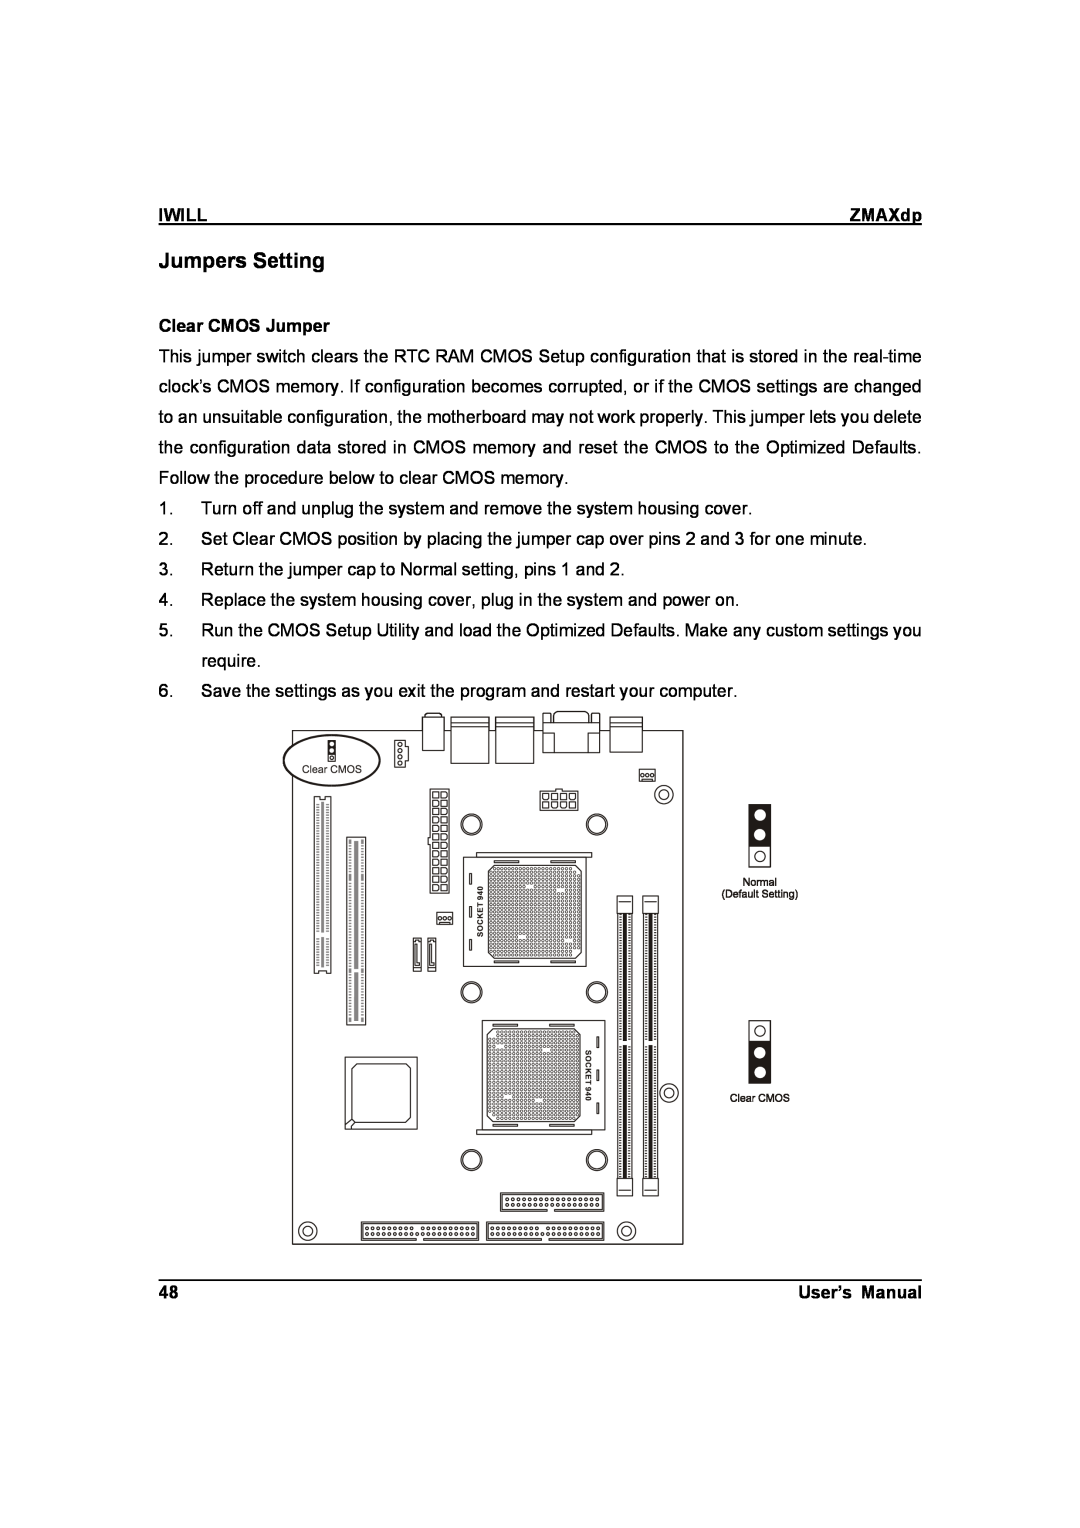 IBM ZMAXdp user manual Jumpers Setting, Iwill, Clear CMOS Jumper, User’s Manual 